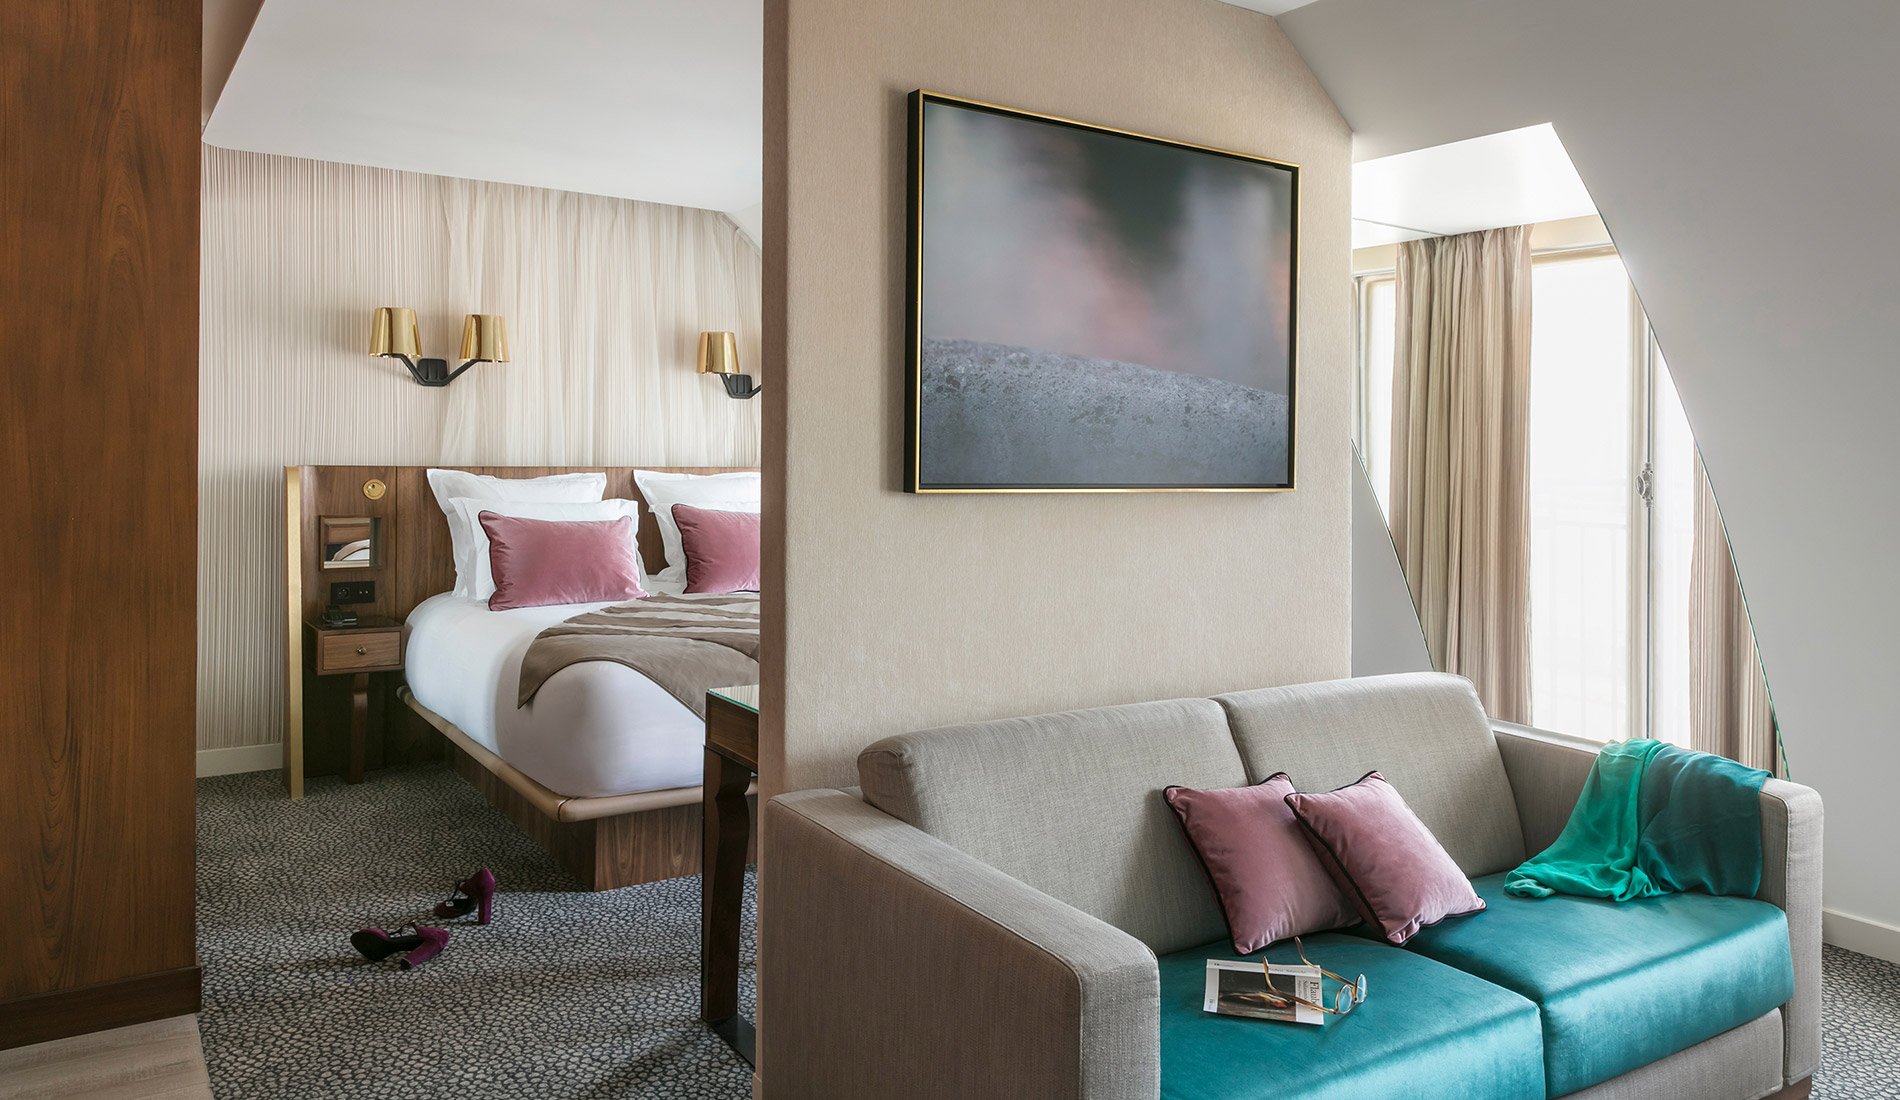 Luxury hotel - Maison Albar Hotels Le Pont-Neuf - 5-star - comfortable suite